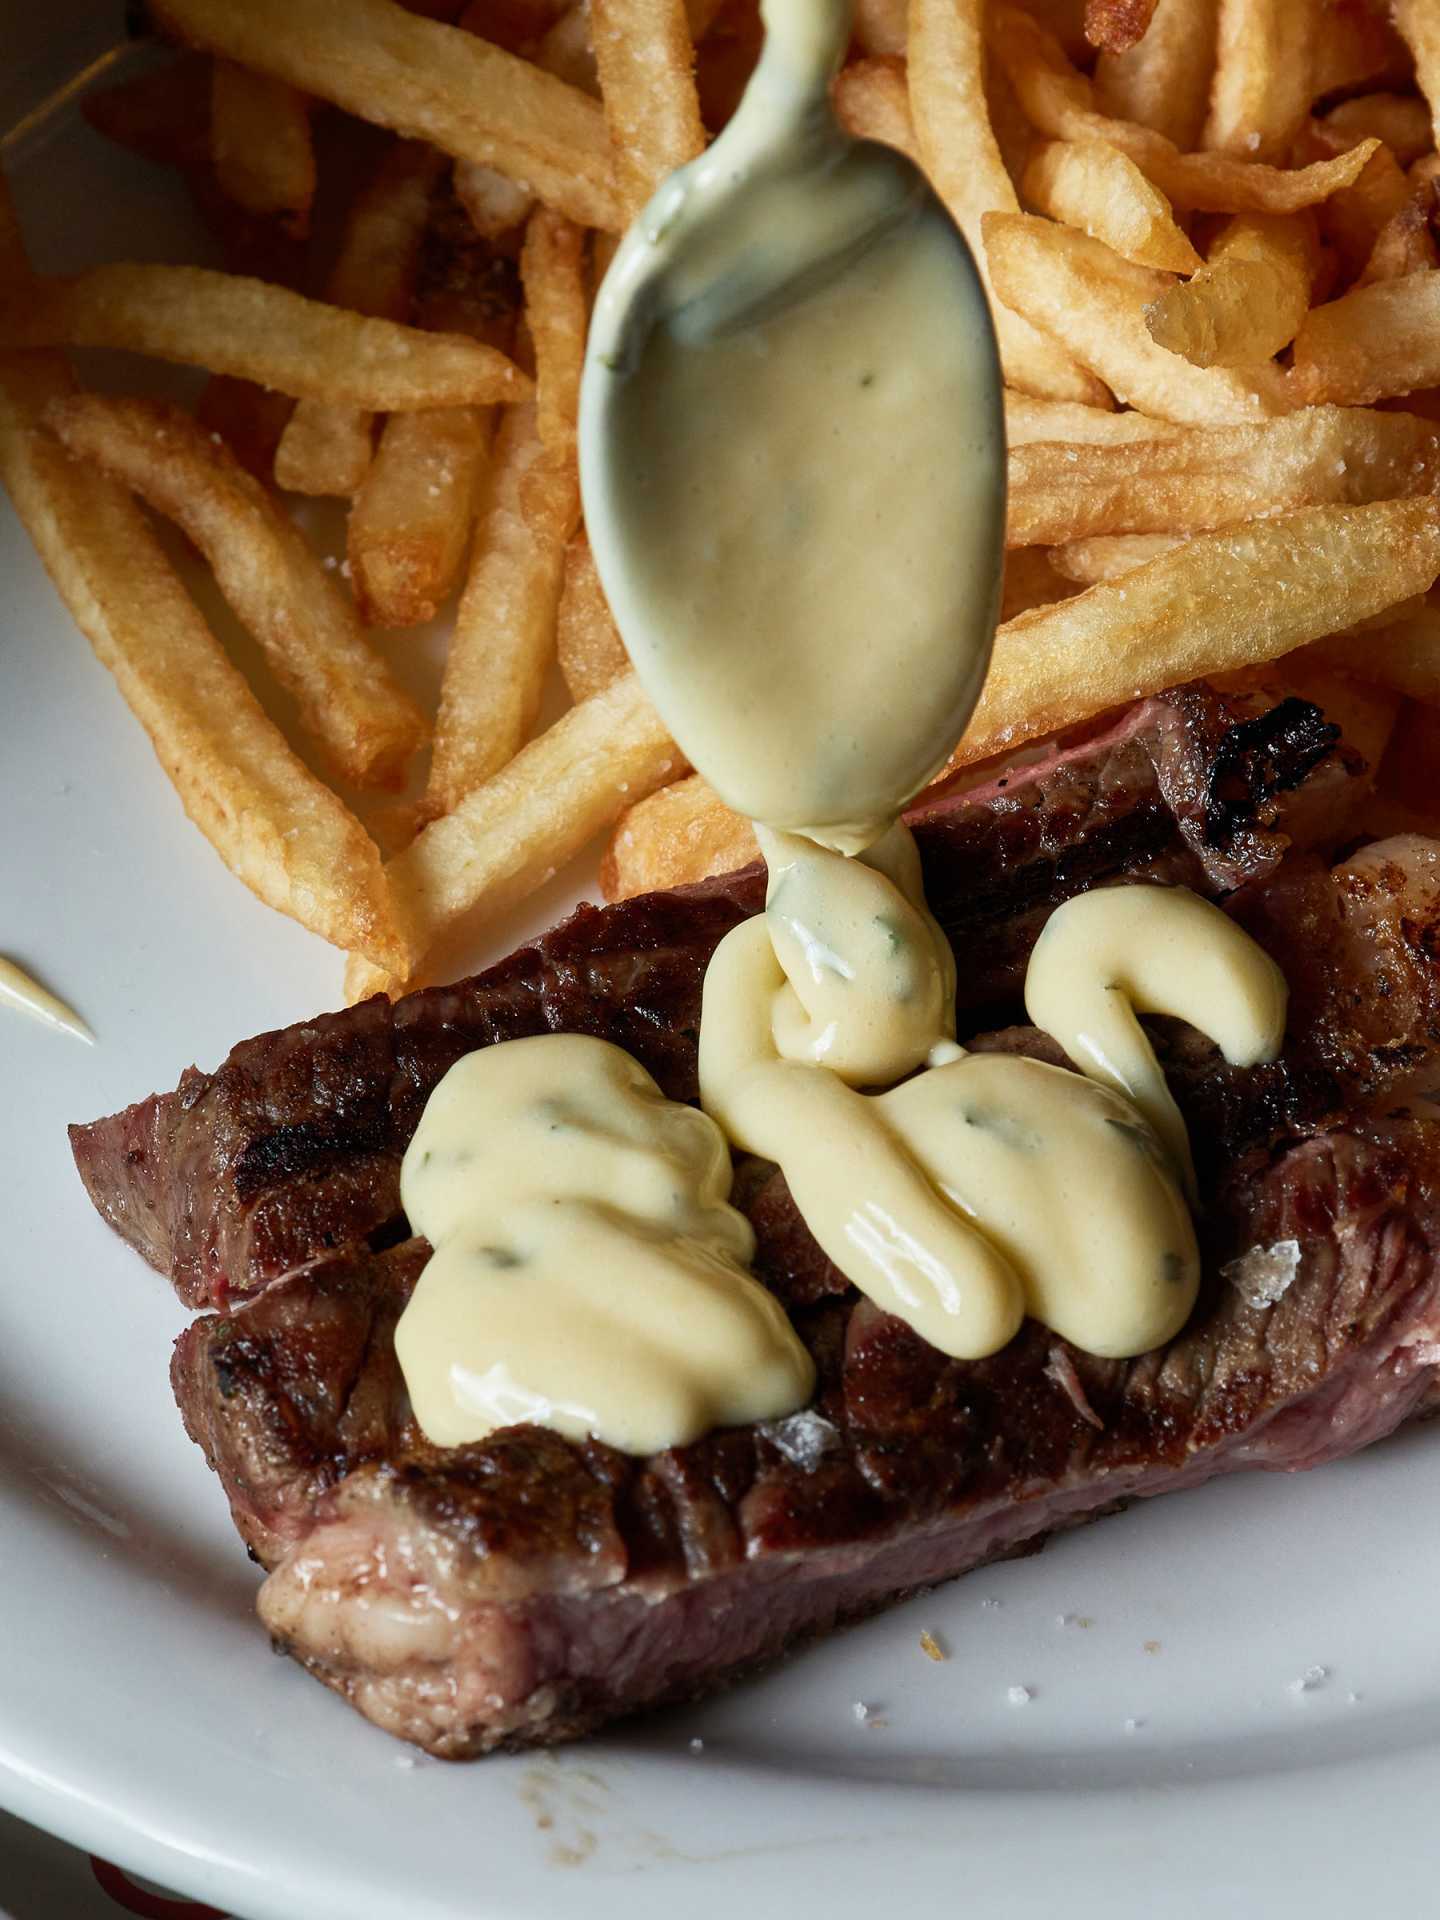 Best new Toronto restaurants | Drizzling sauce on steak at J's Steak Frites